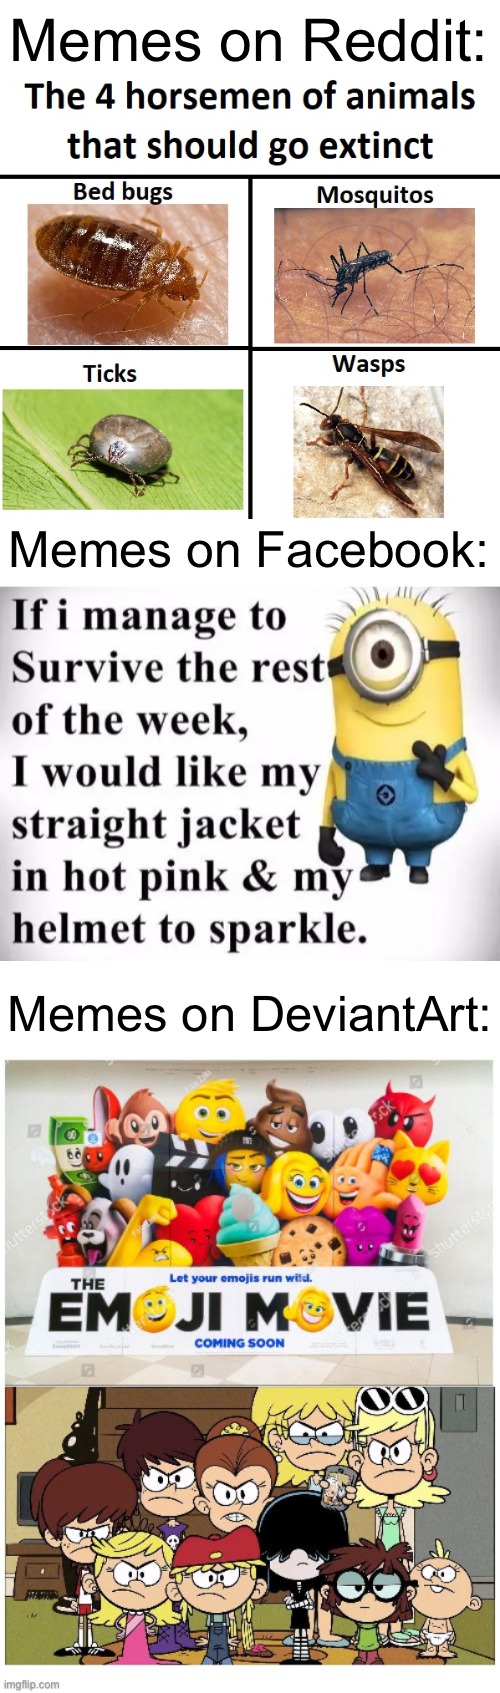 A DeviantArt Meme could be Worse than a Facebook Minion Meme | Memes on Reddit:; Memes on Facebook:; Memes on DeviantArt: | image tagged in memes,funny,facebook,reddit,deviantart,minion | made w/ Imgflip meme maker